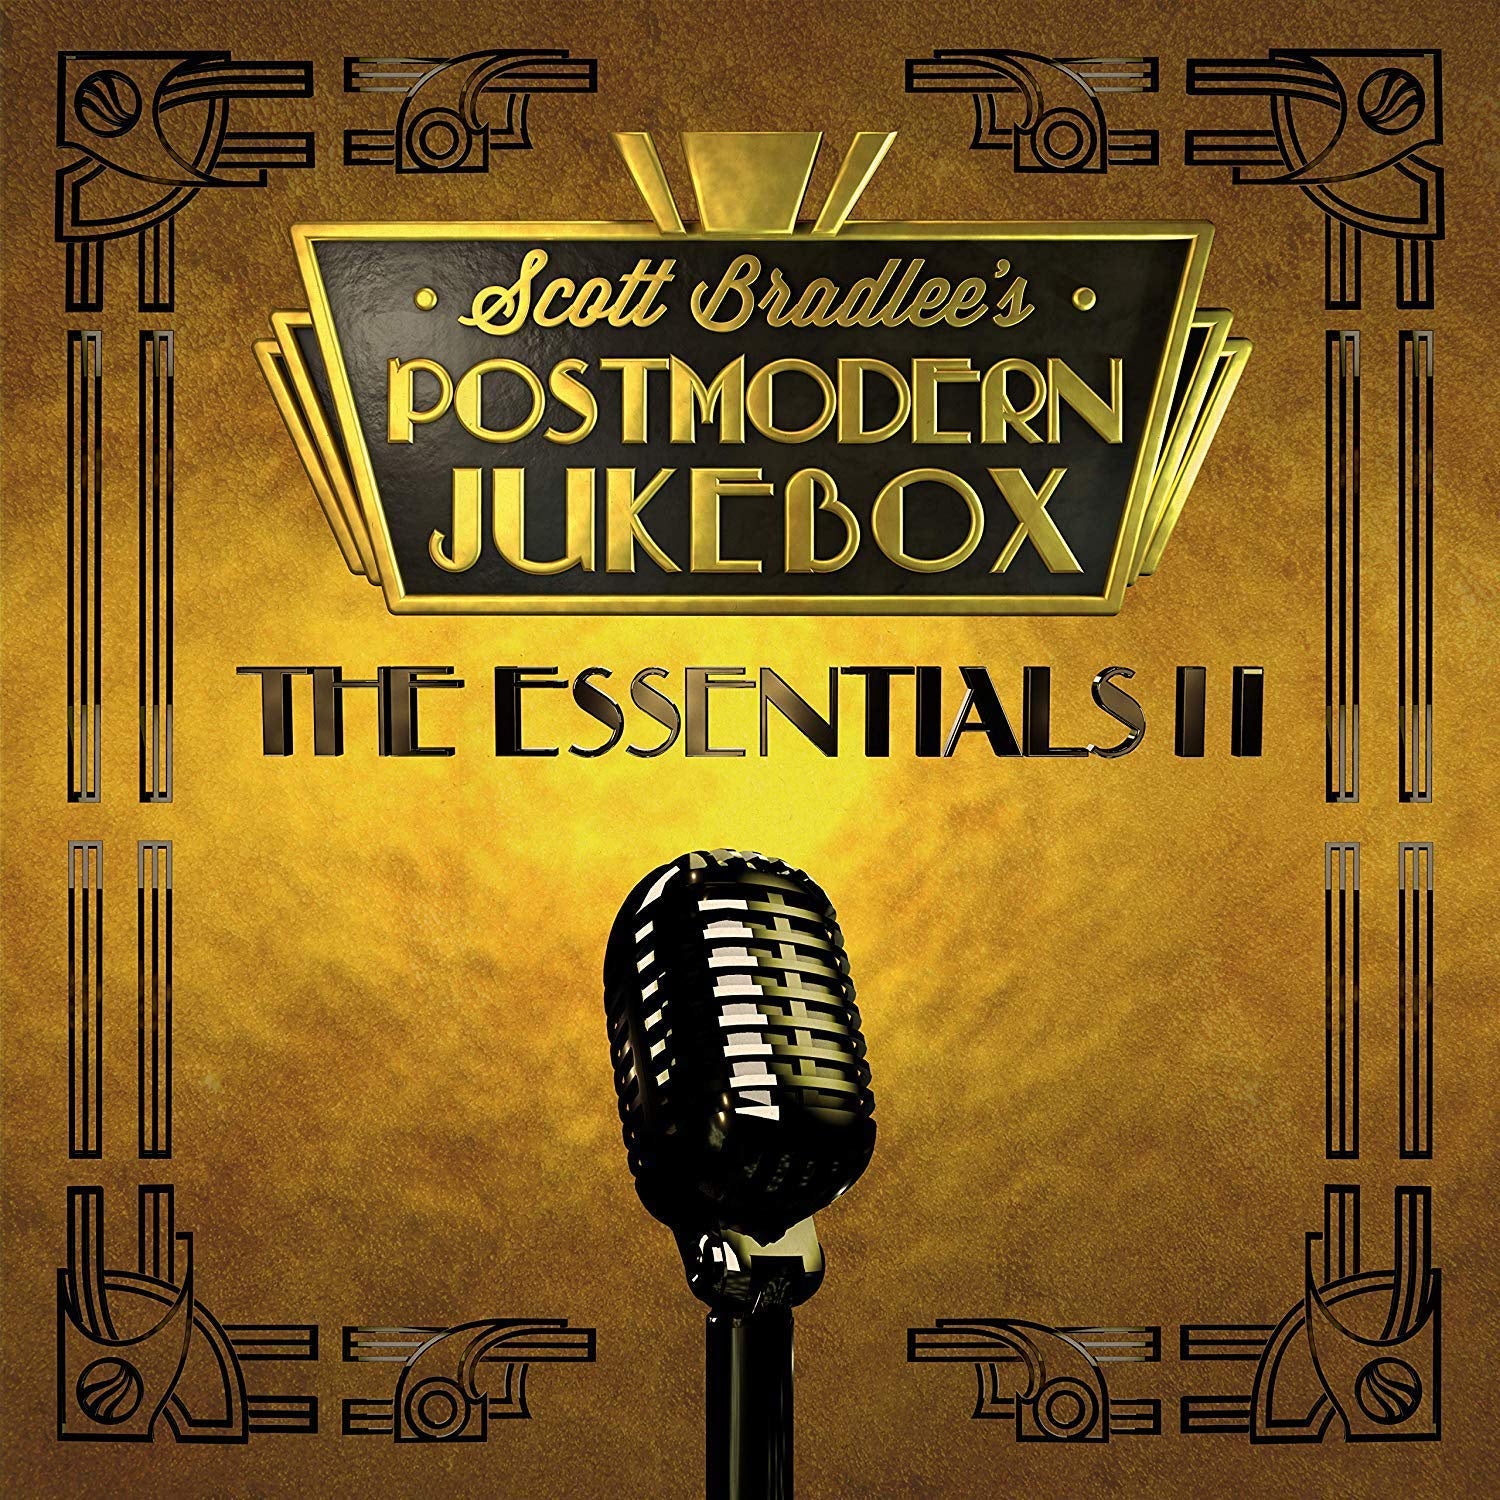 Scott Bradlee's Postmodern Jukebox —Essentials II - New Vinyl 2 Lp 2018 Concord Records Compilation - Big Band Jazz Covers